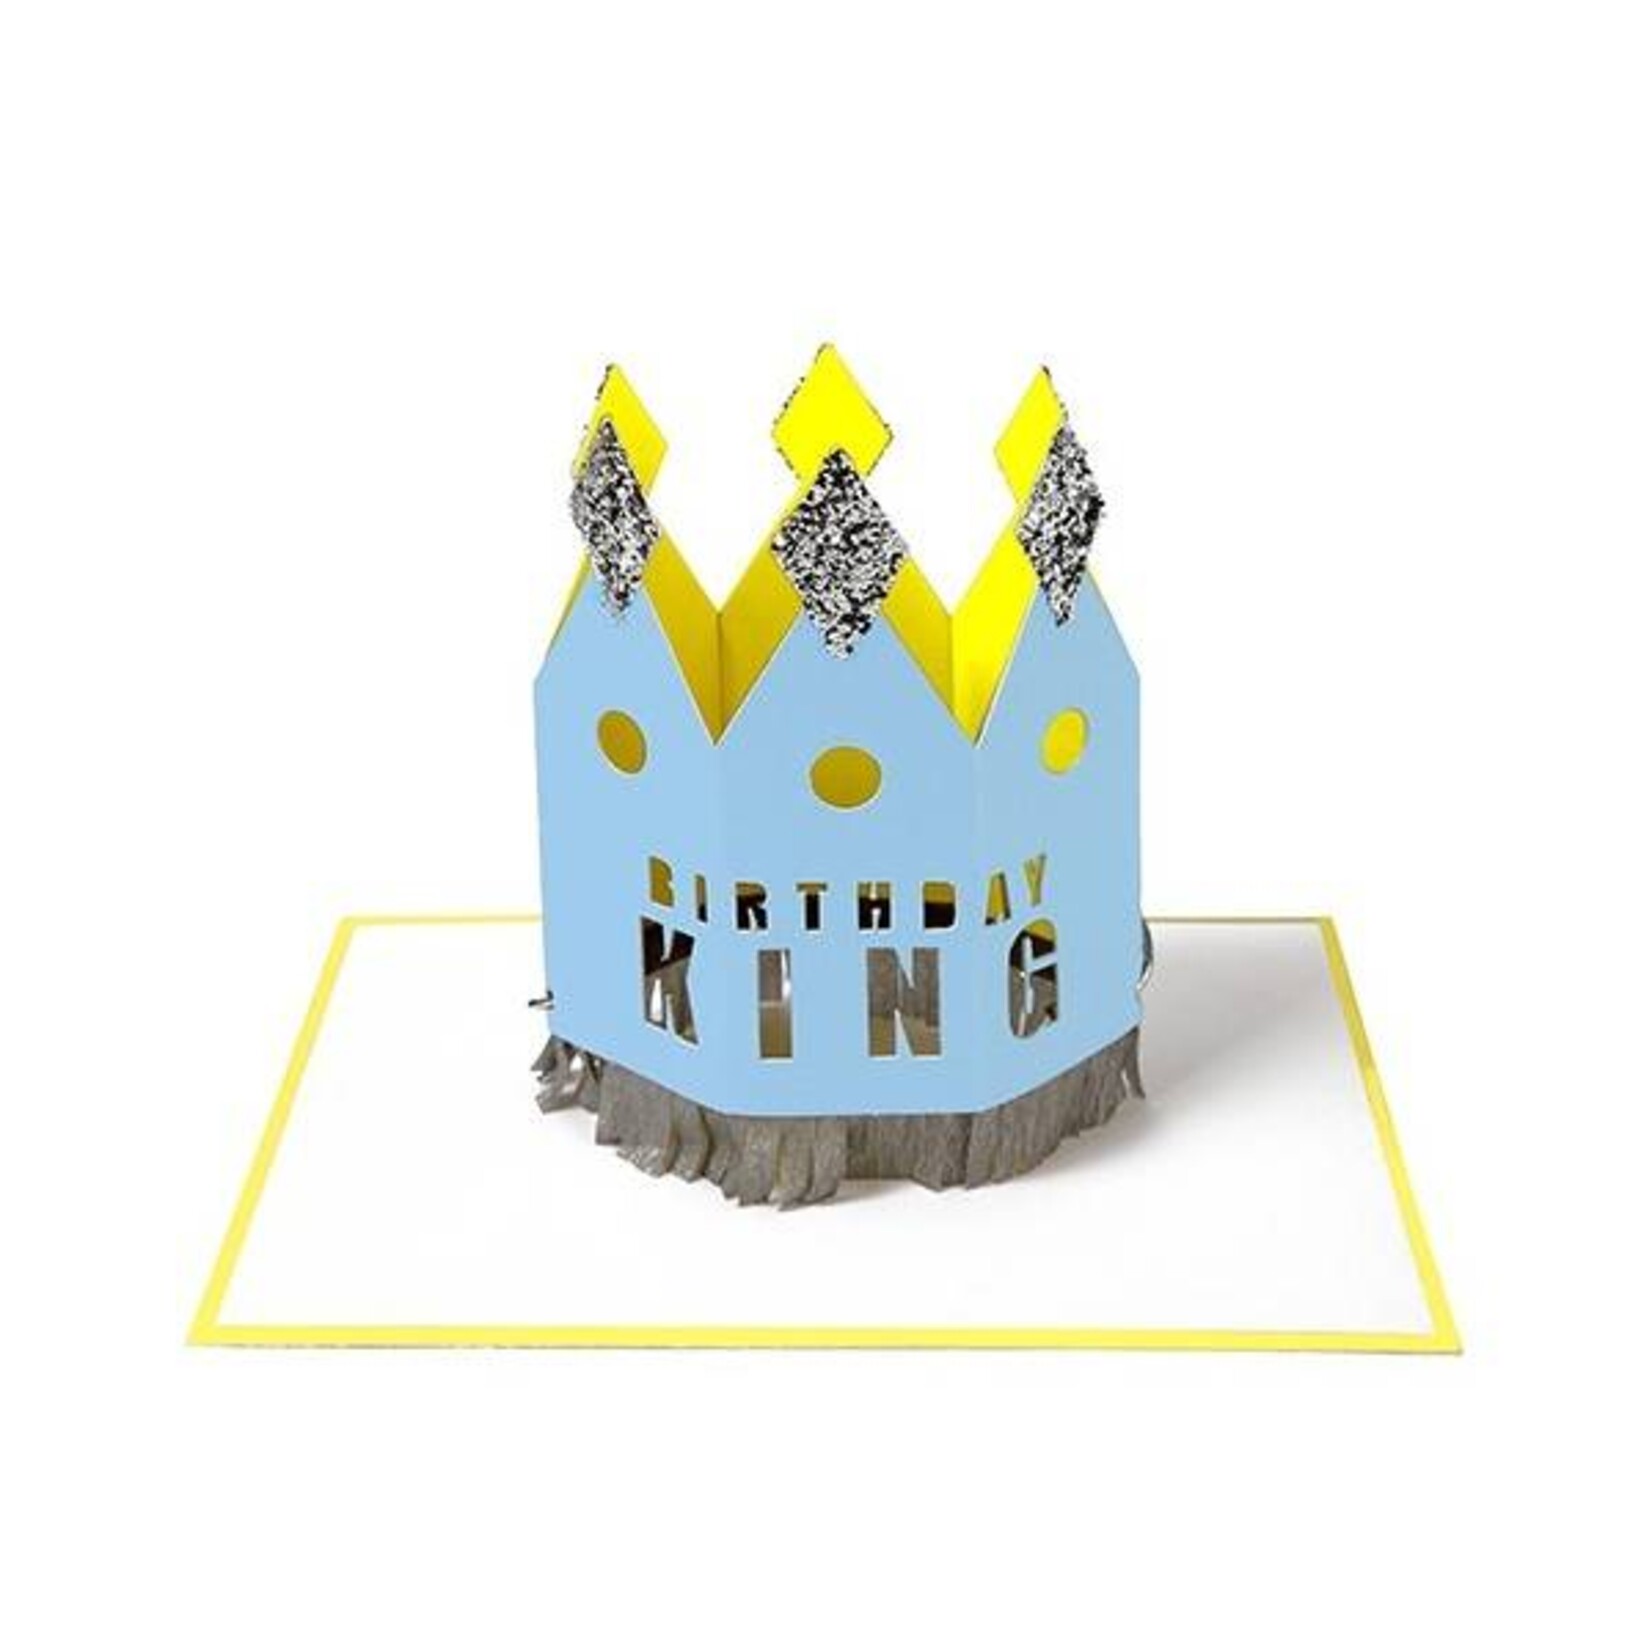 MERIMERI Birthday King crown